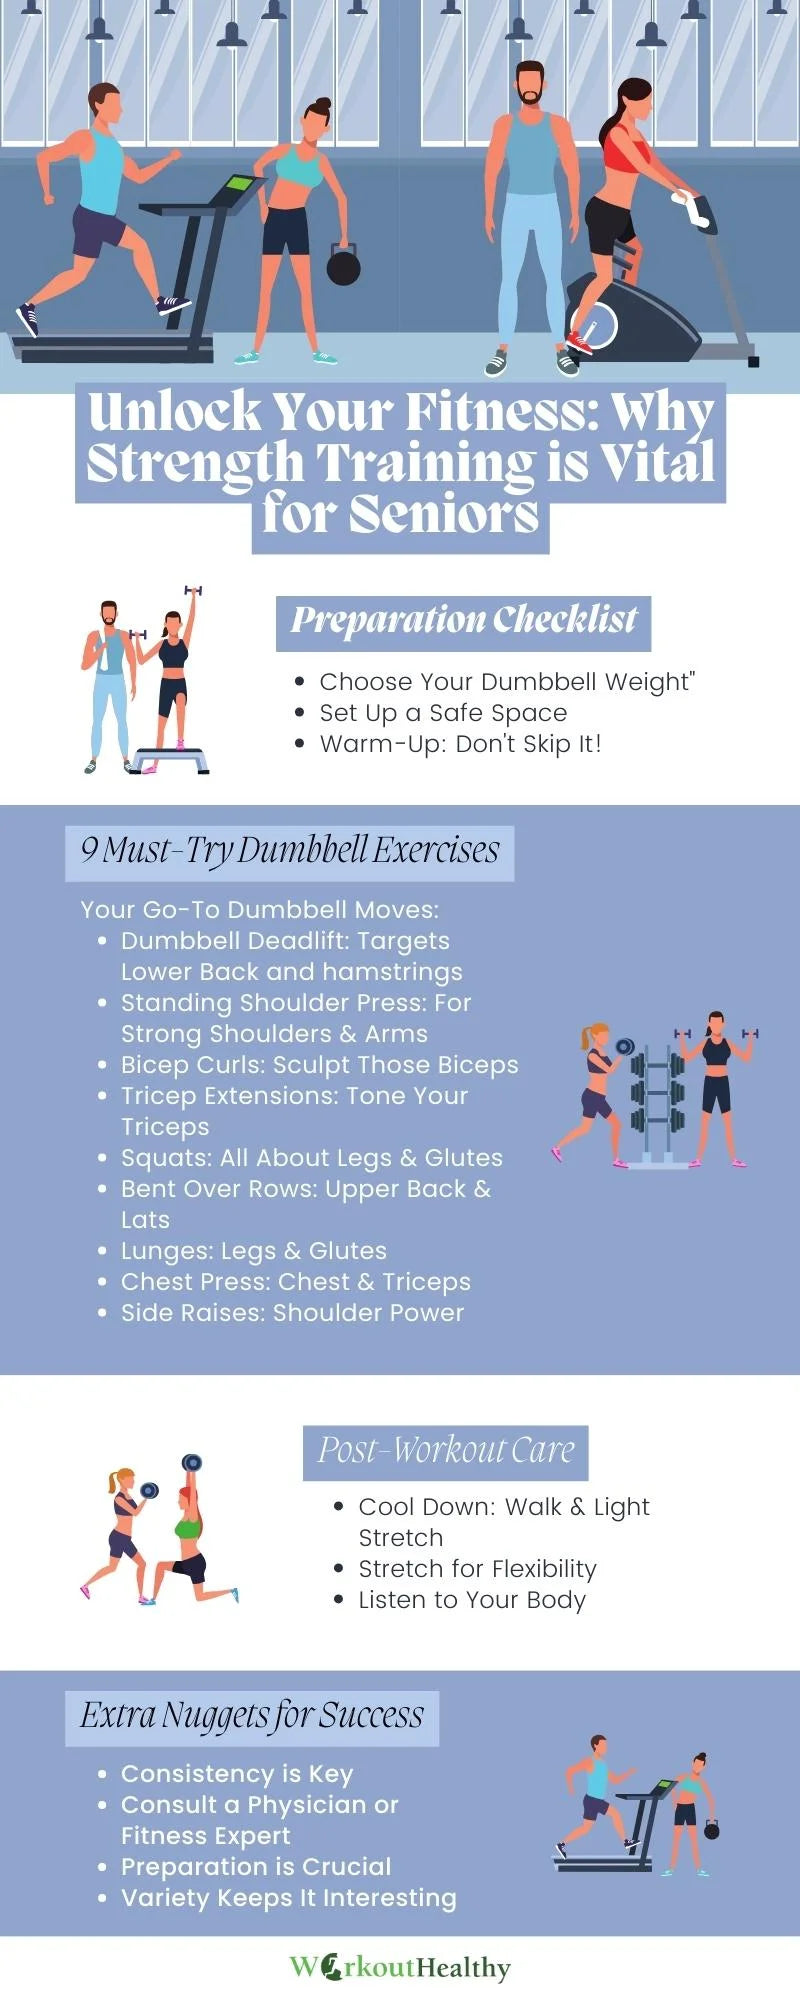 dumbbell exercises at home for seniors infographic (1)